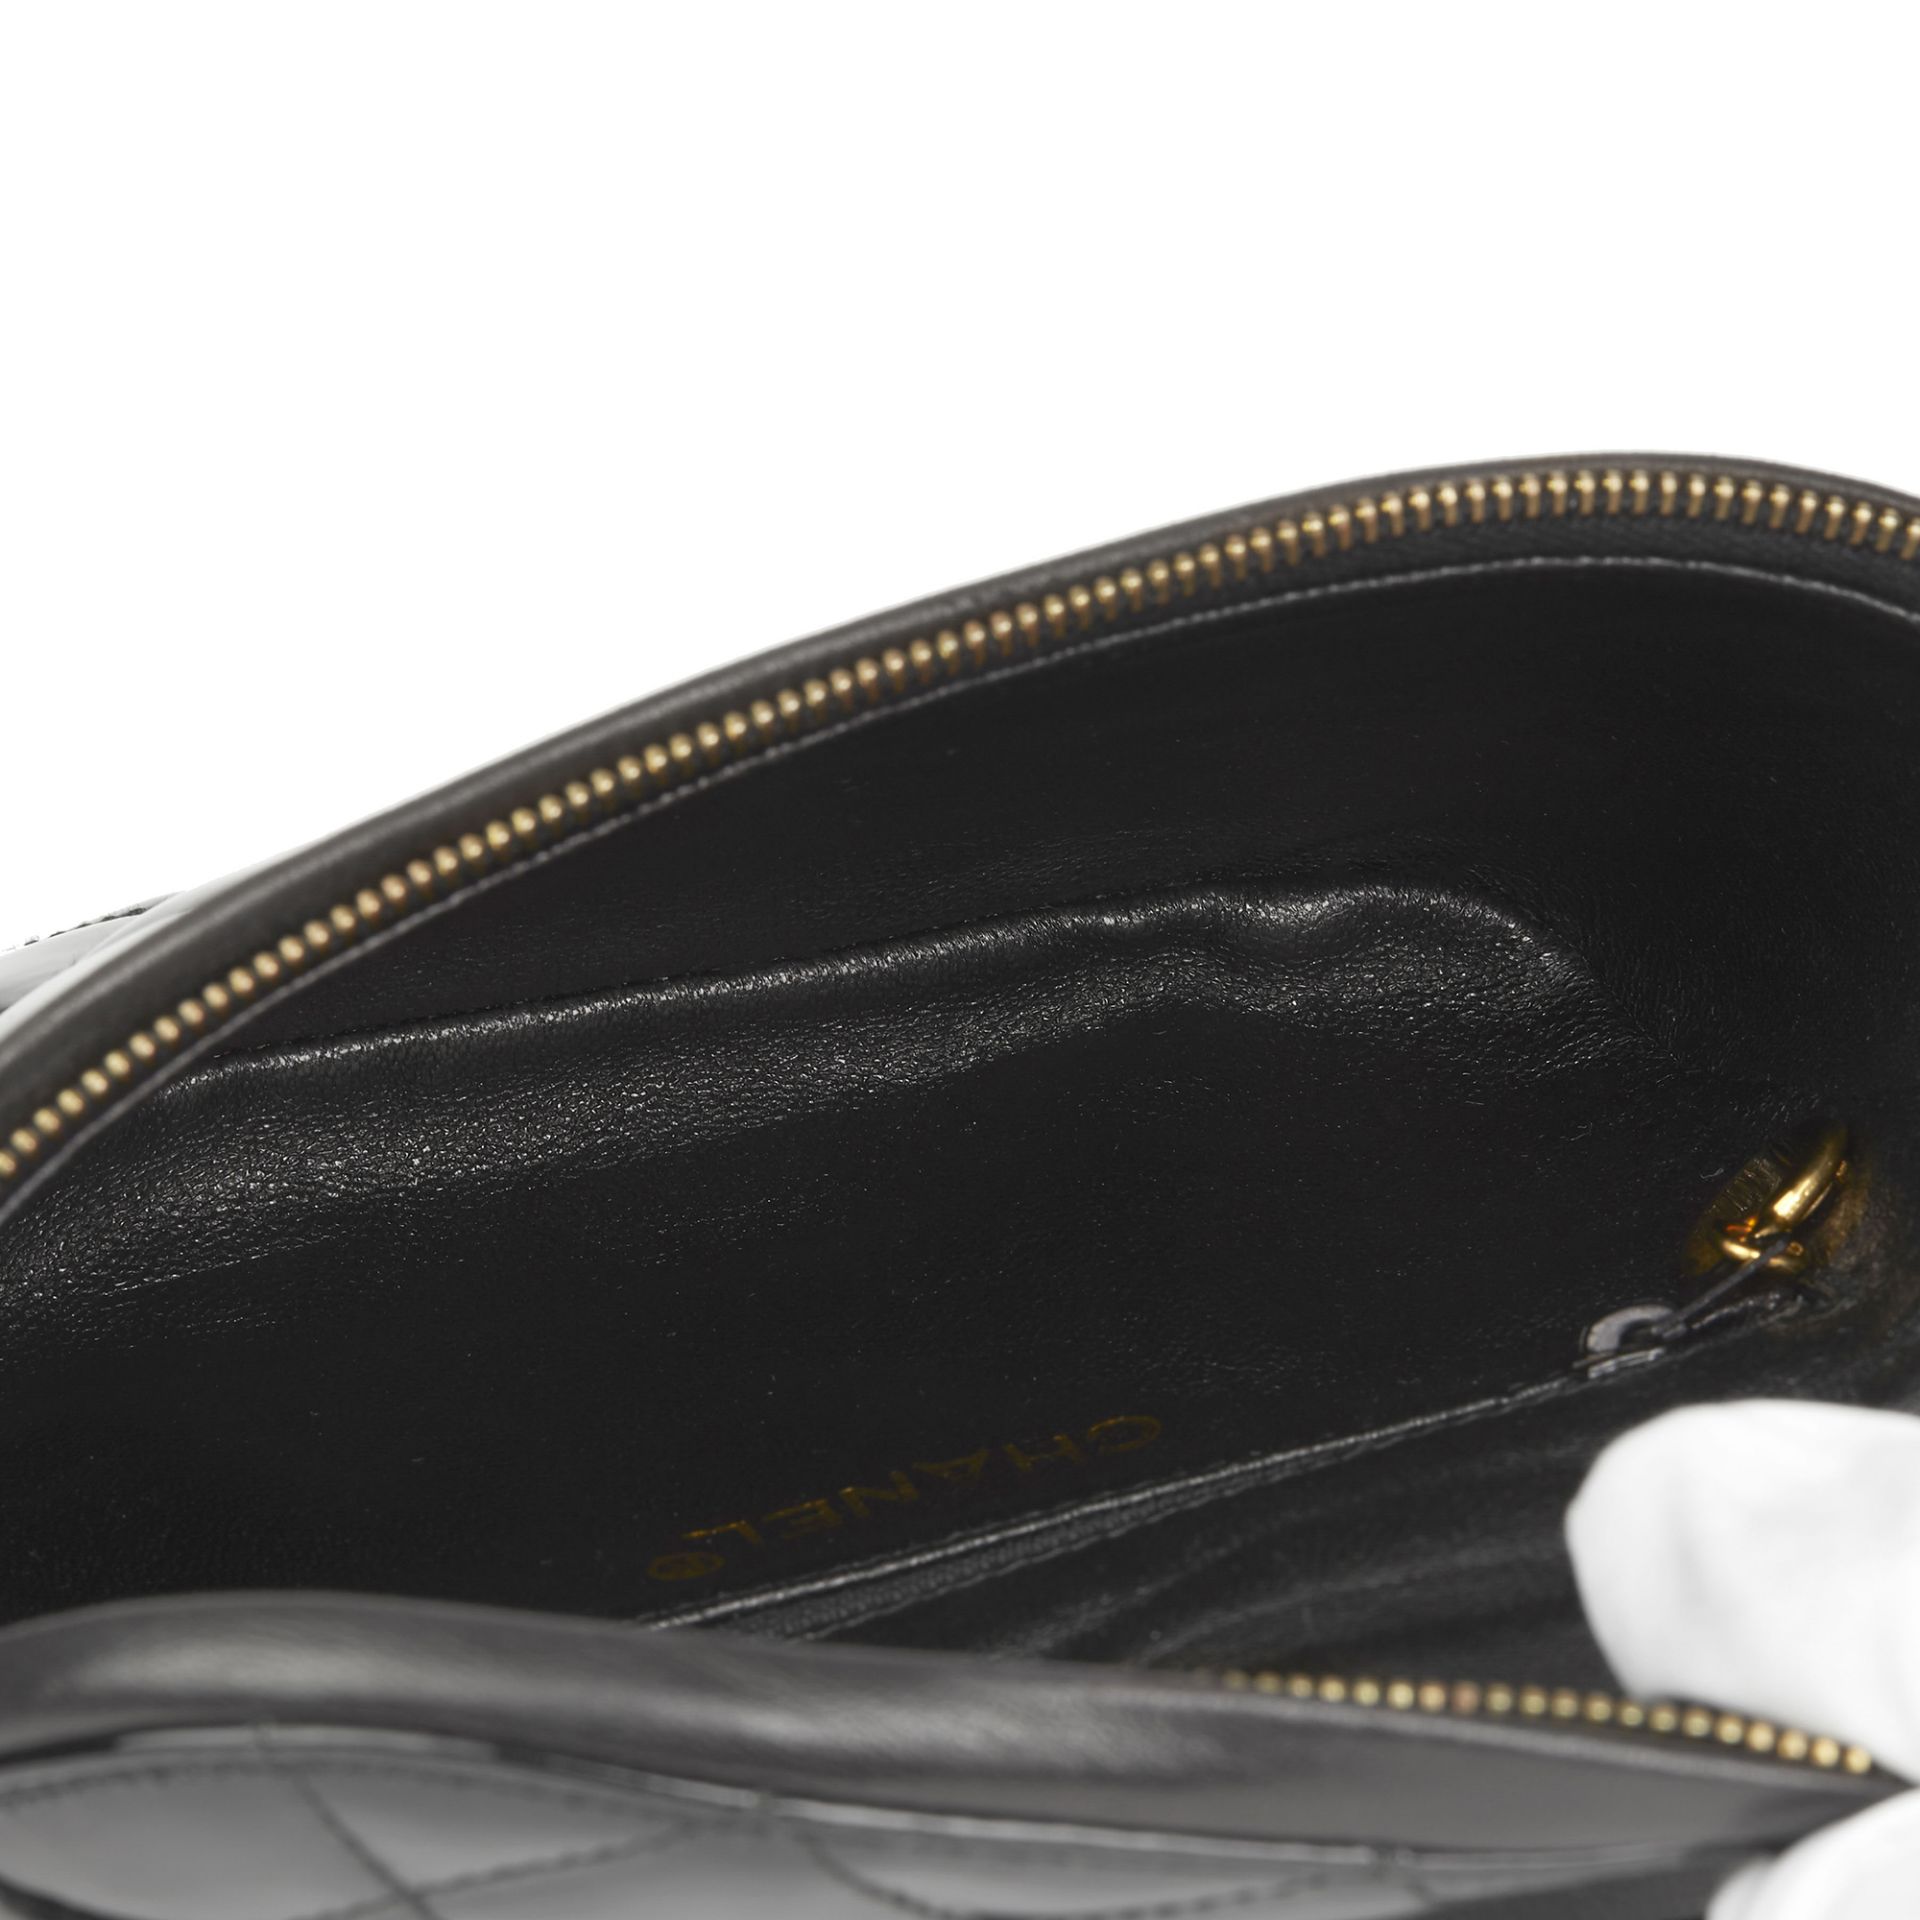 Chanel Black Quilted Patent Leather Vintage Timeless Belt Bag - Image 4 of 12